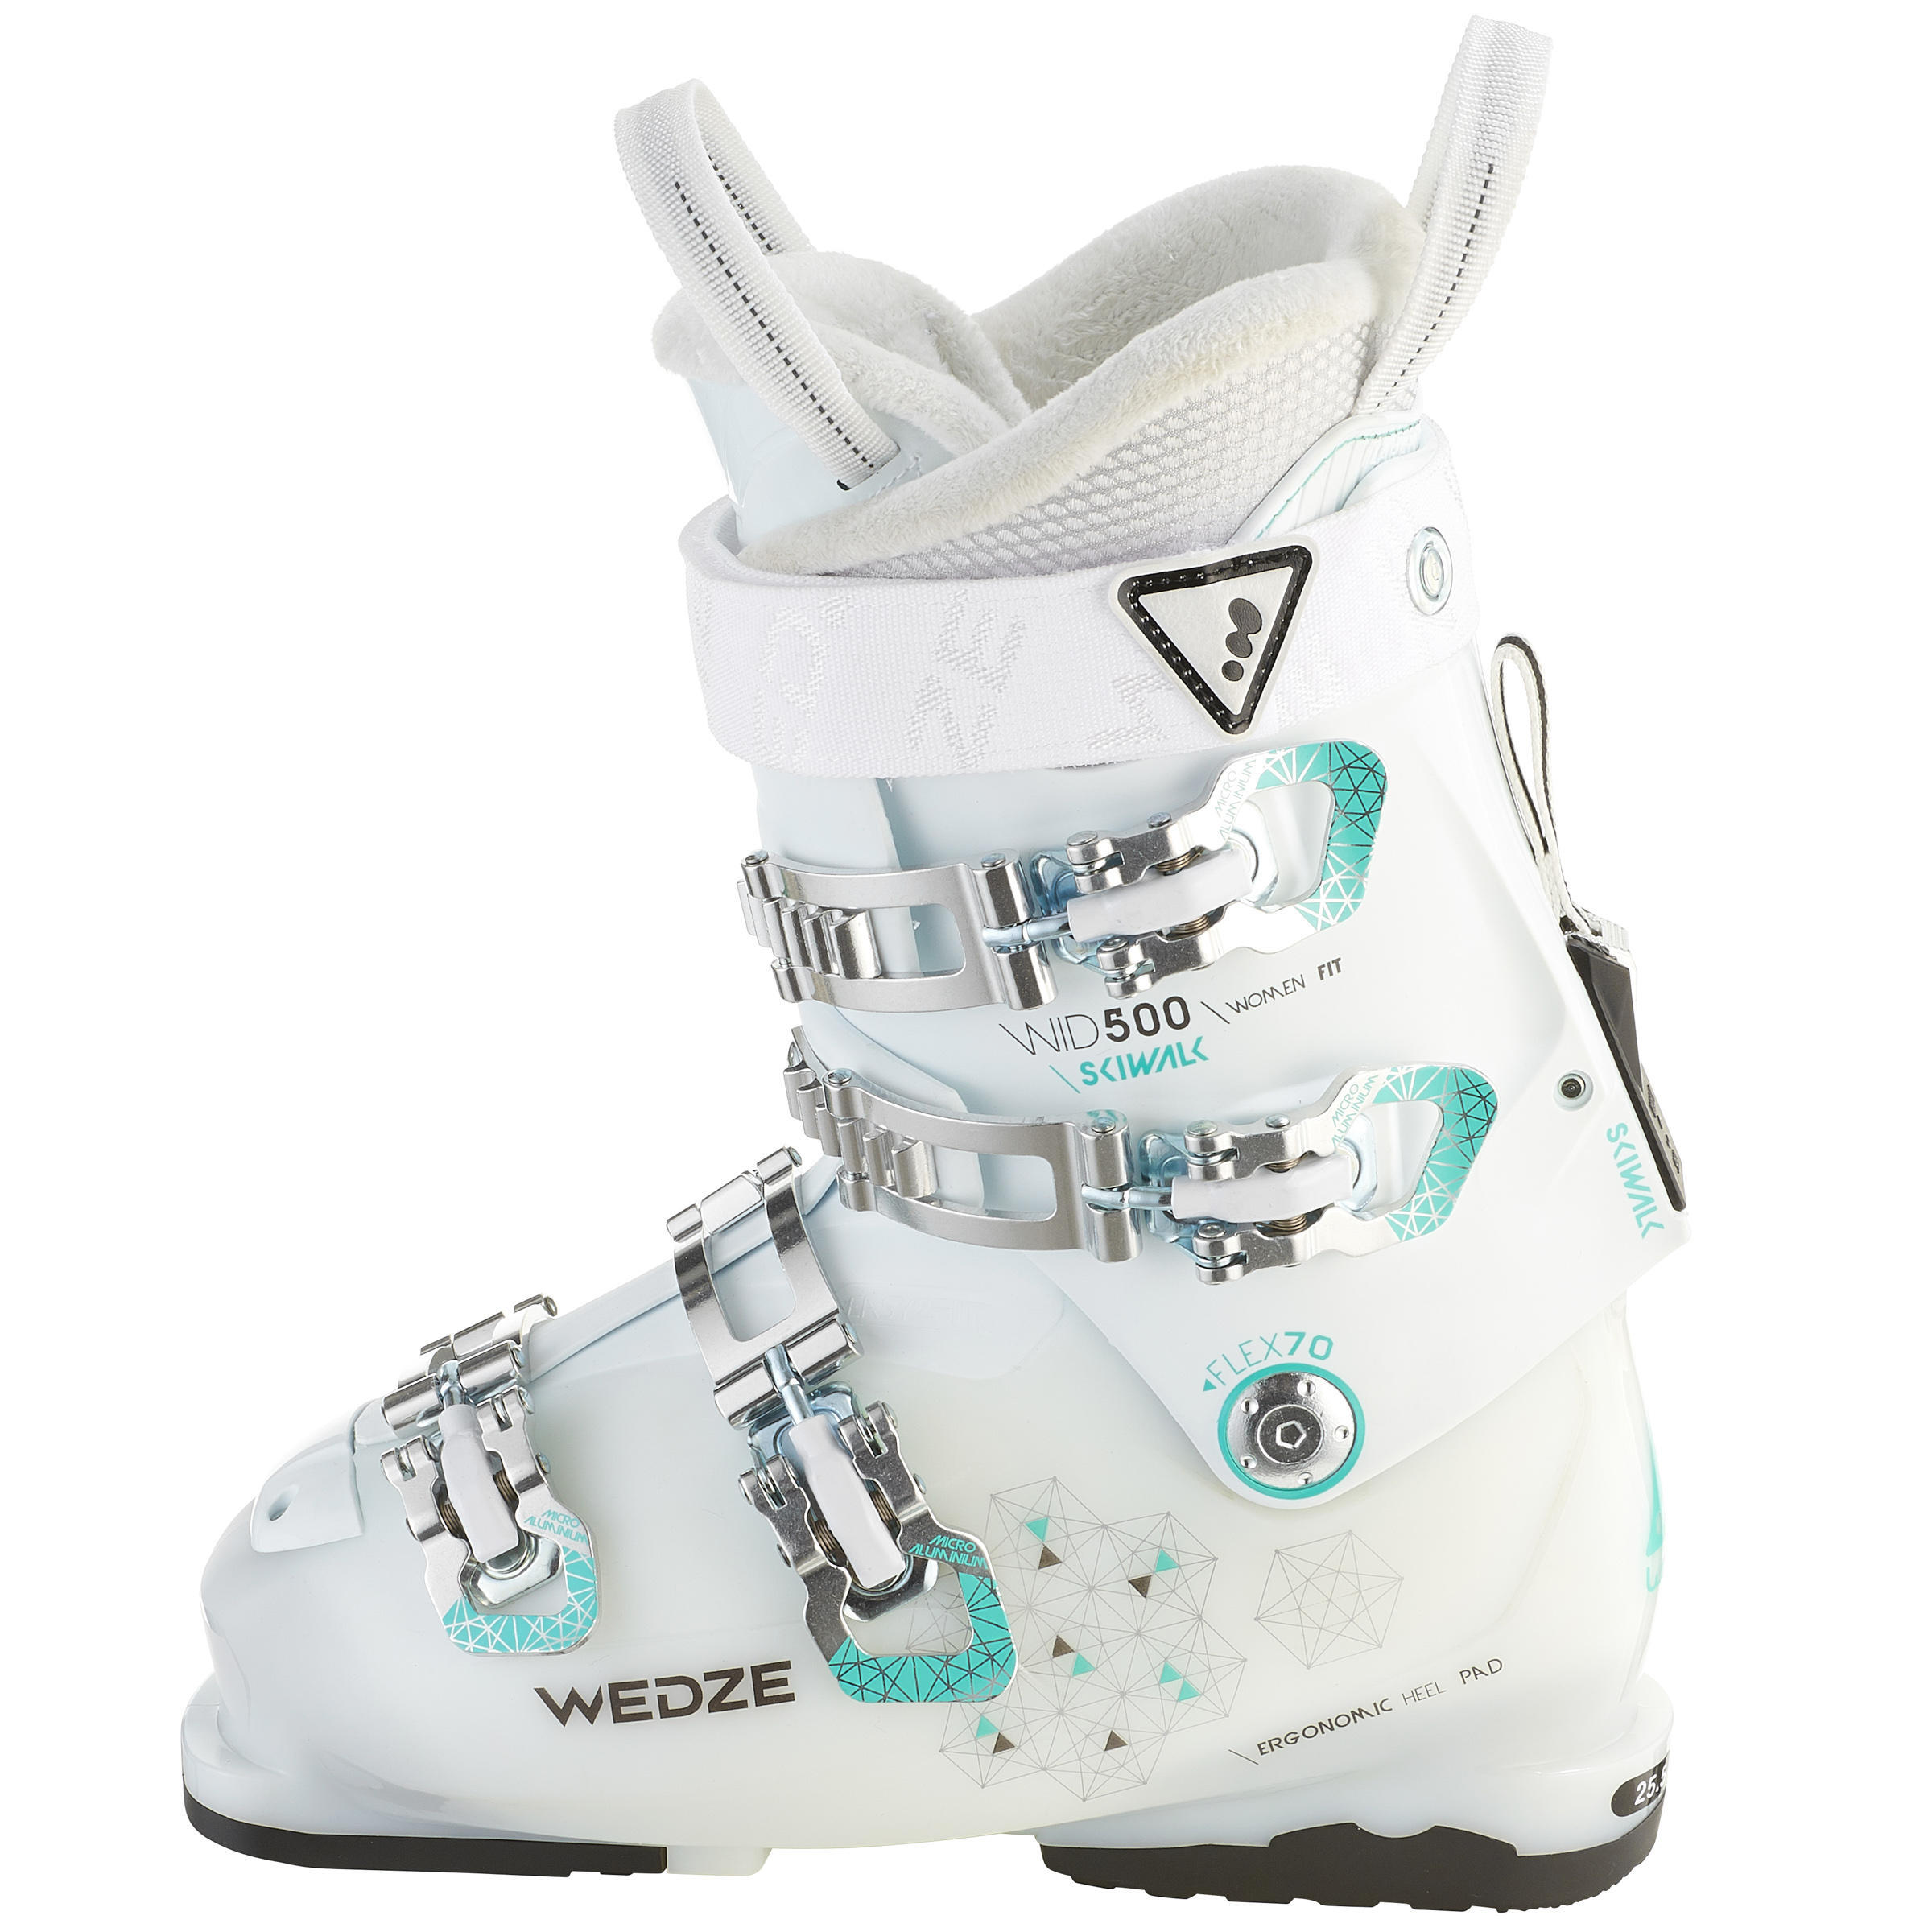 Refurbished Womens Downhill Ski Boots White - C Grade 5/7